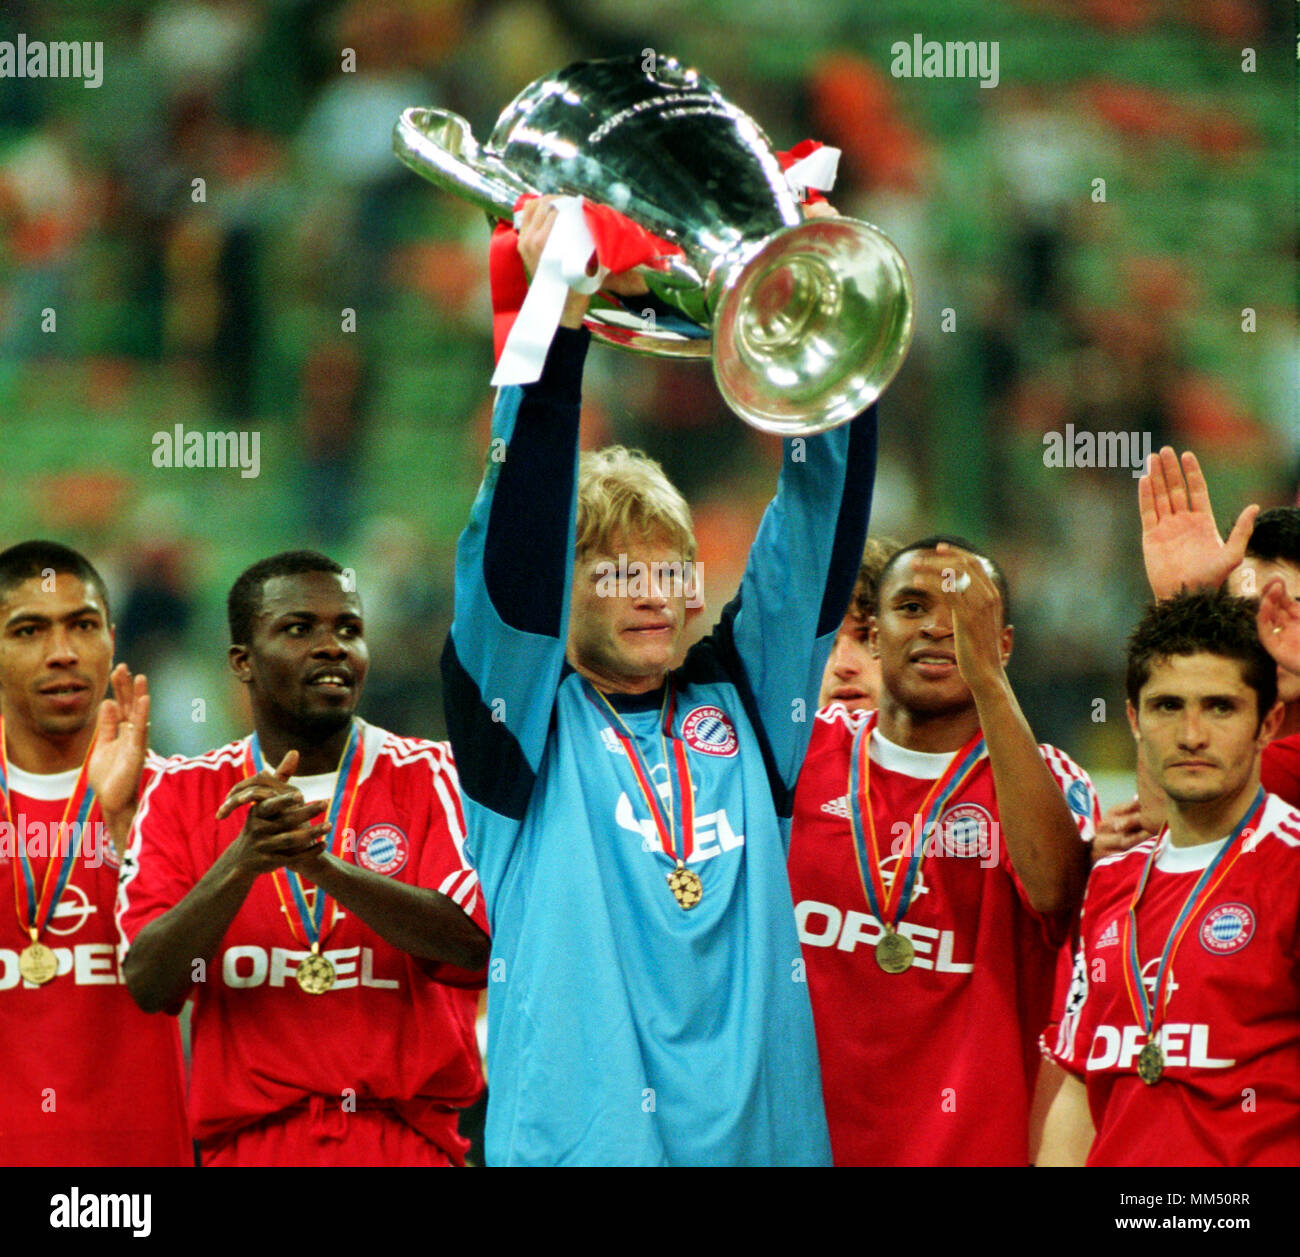 2000 uefa champions league final